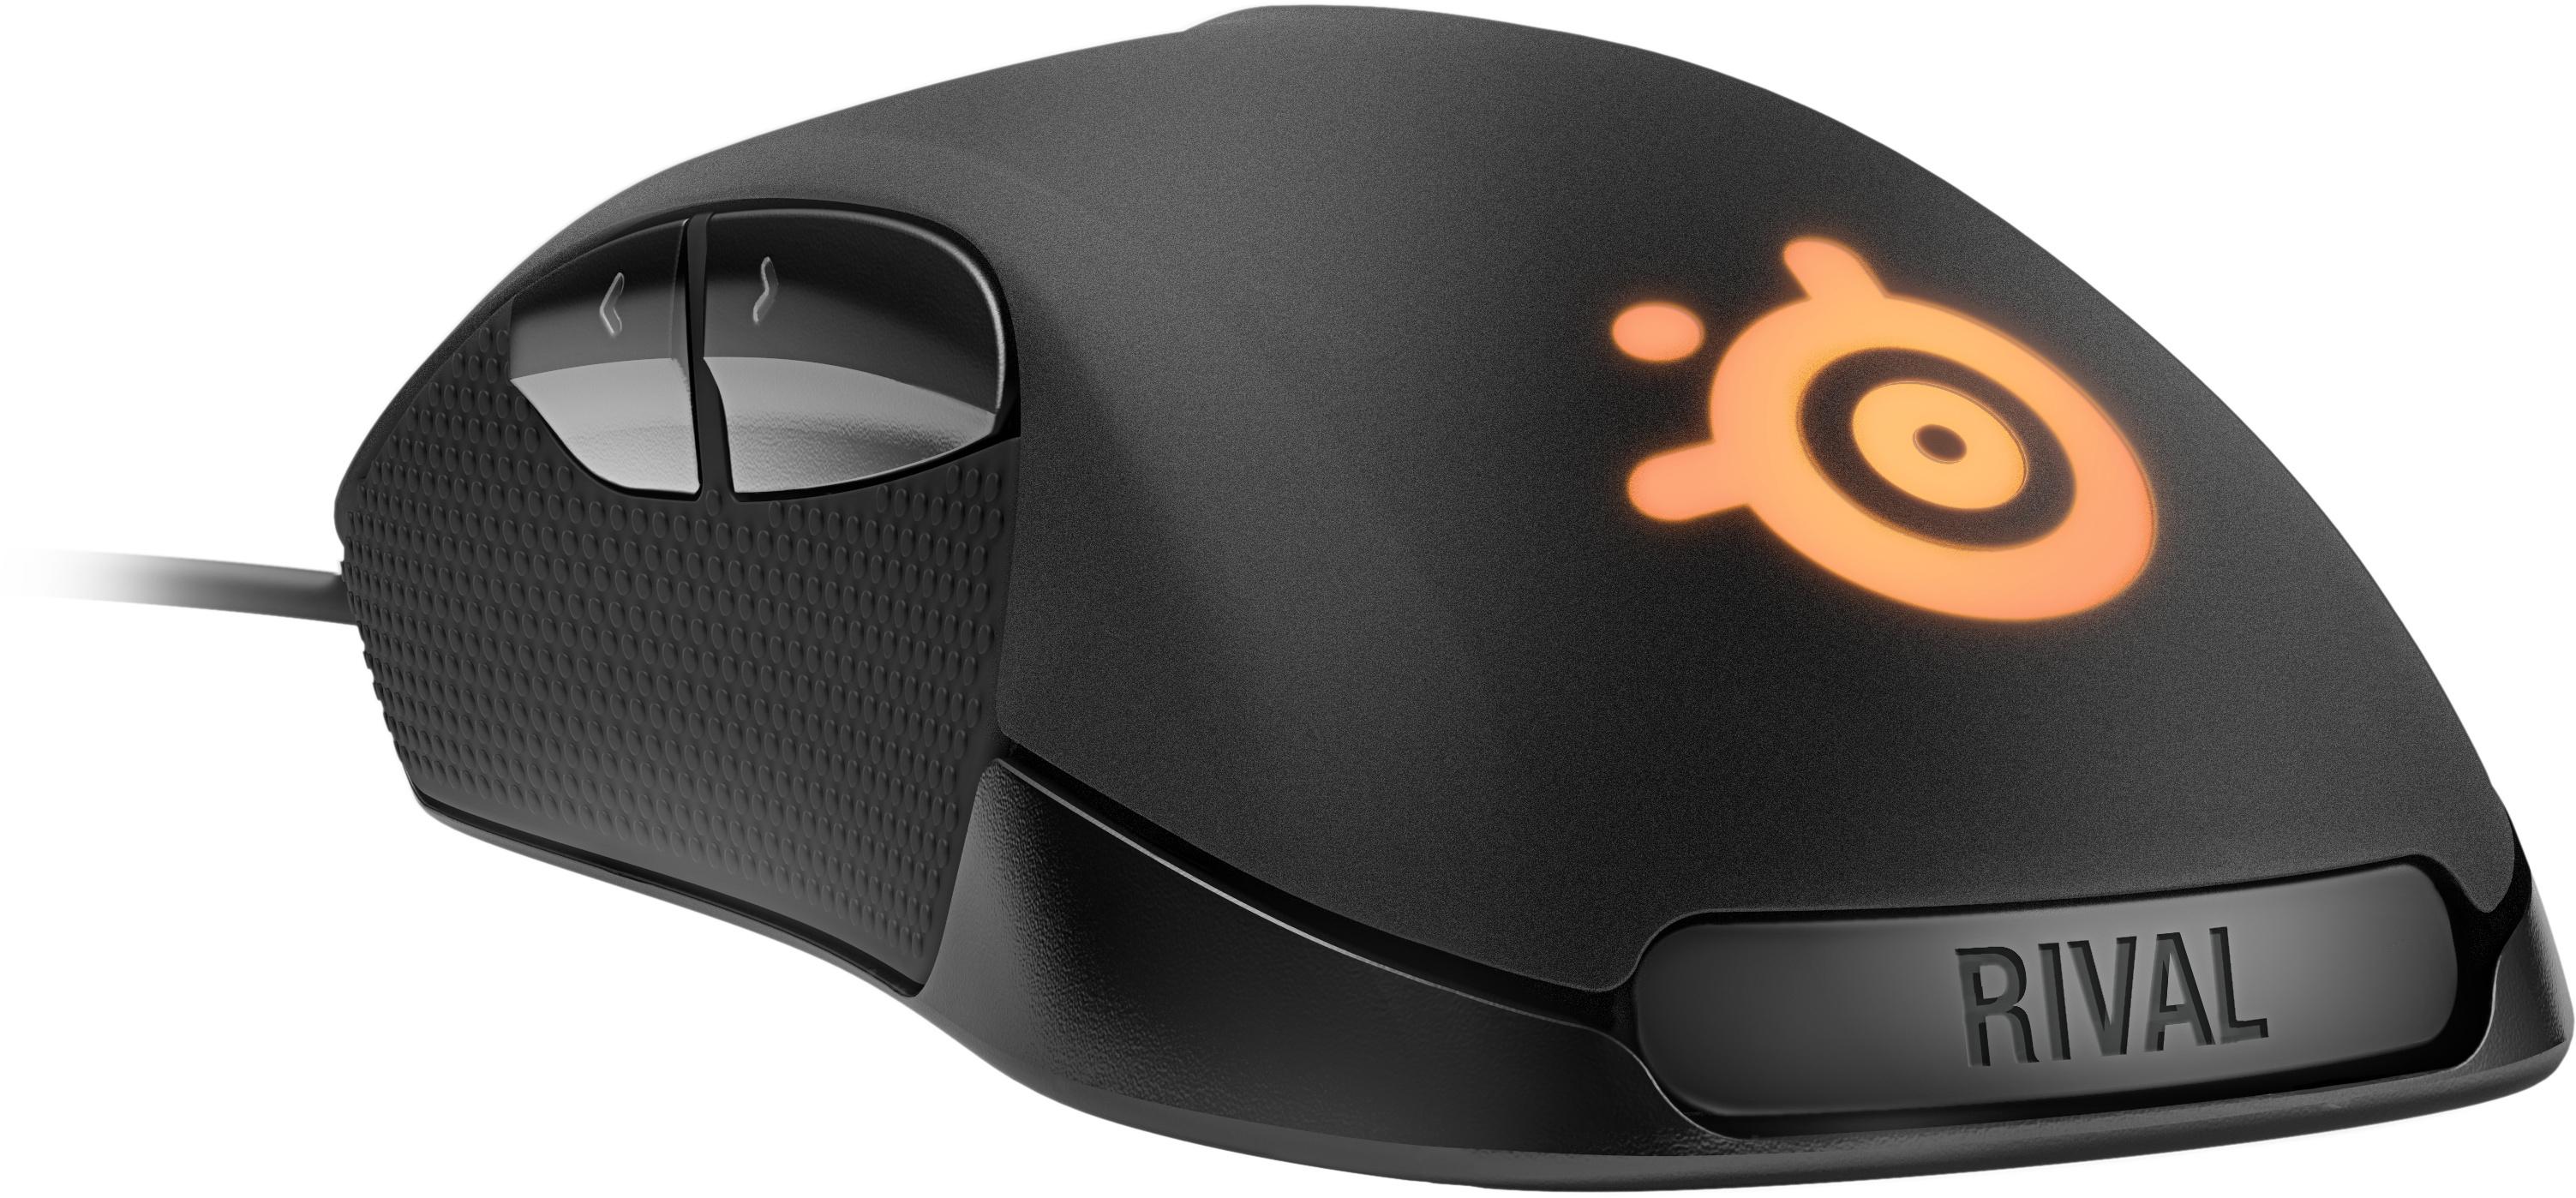 SteelSeries Rival 300 Gaming Mouse - "Gã khổng lồ" của làng game FPS